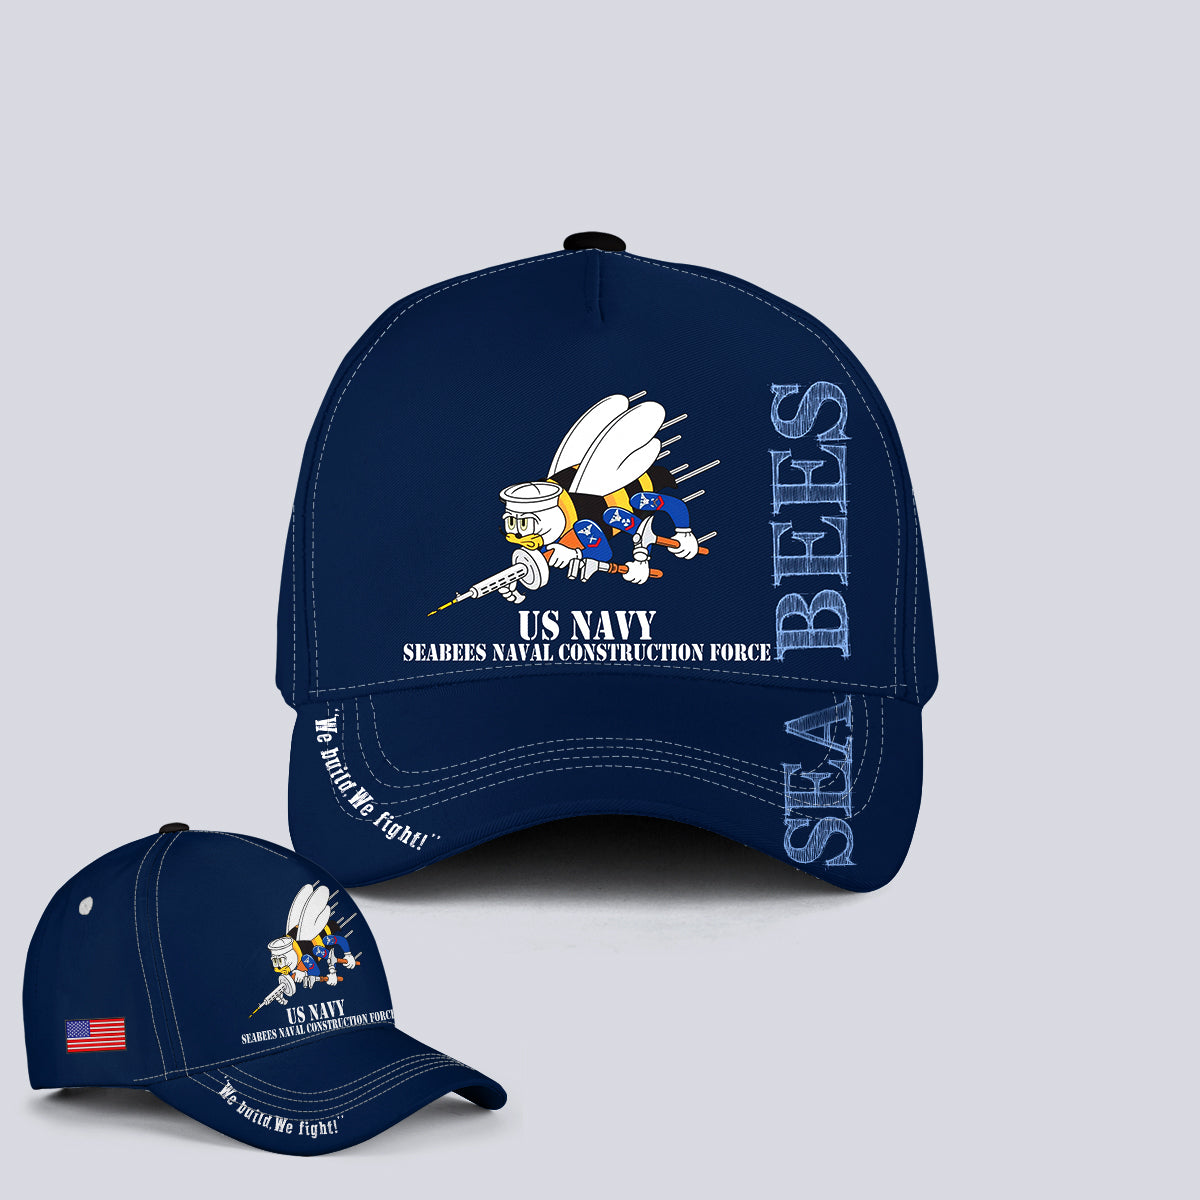 US Navy SEABEES Naval Construction Force (NCF) Baseball Cap